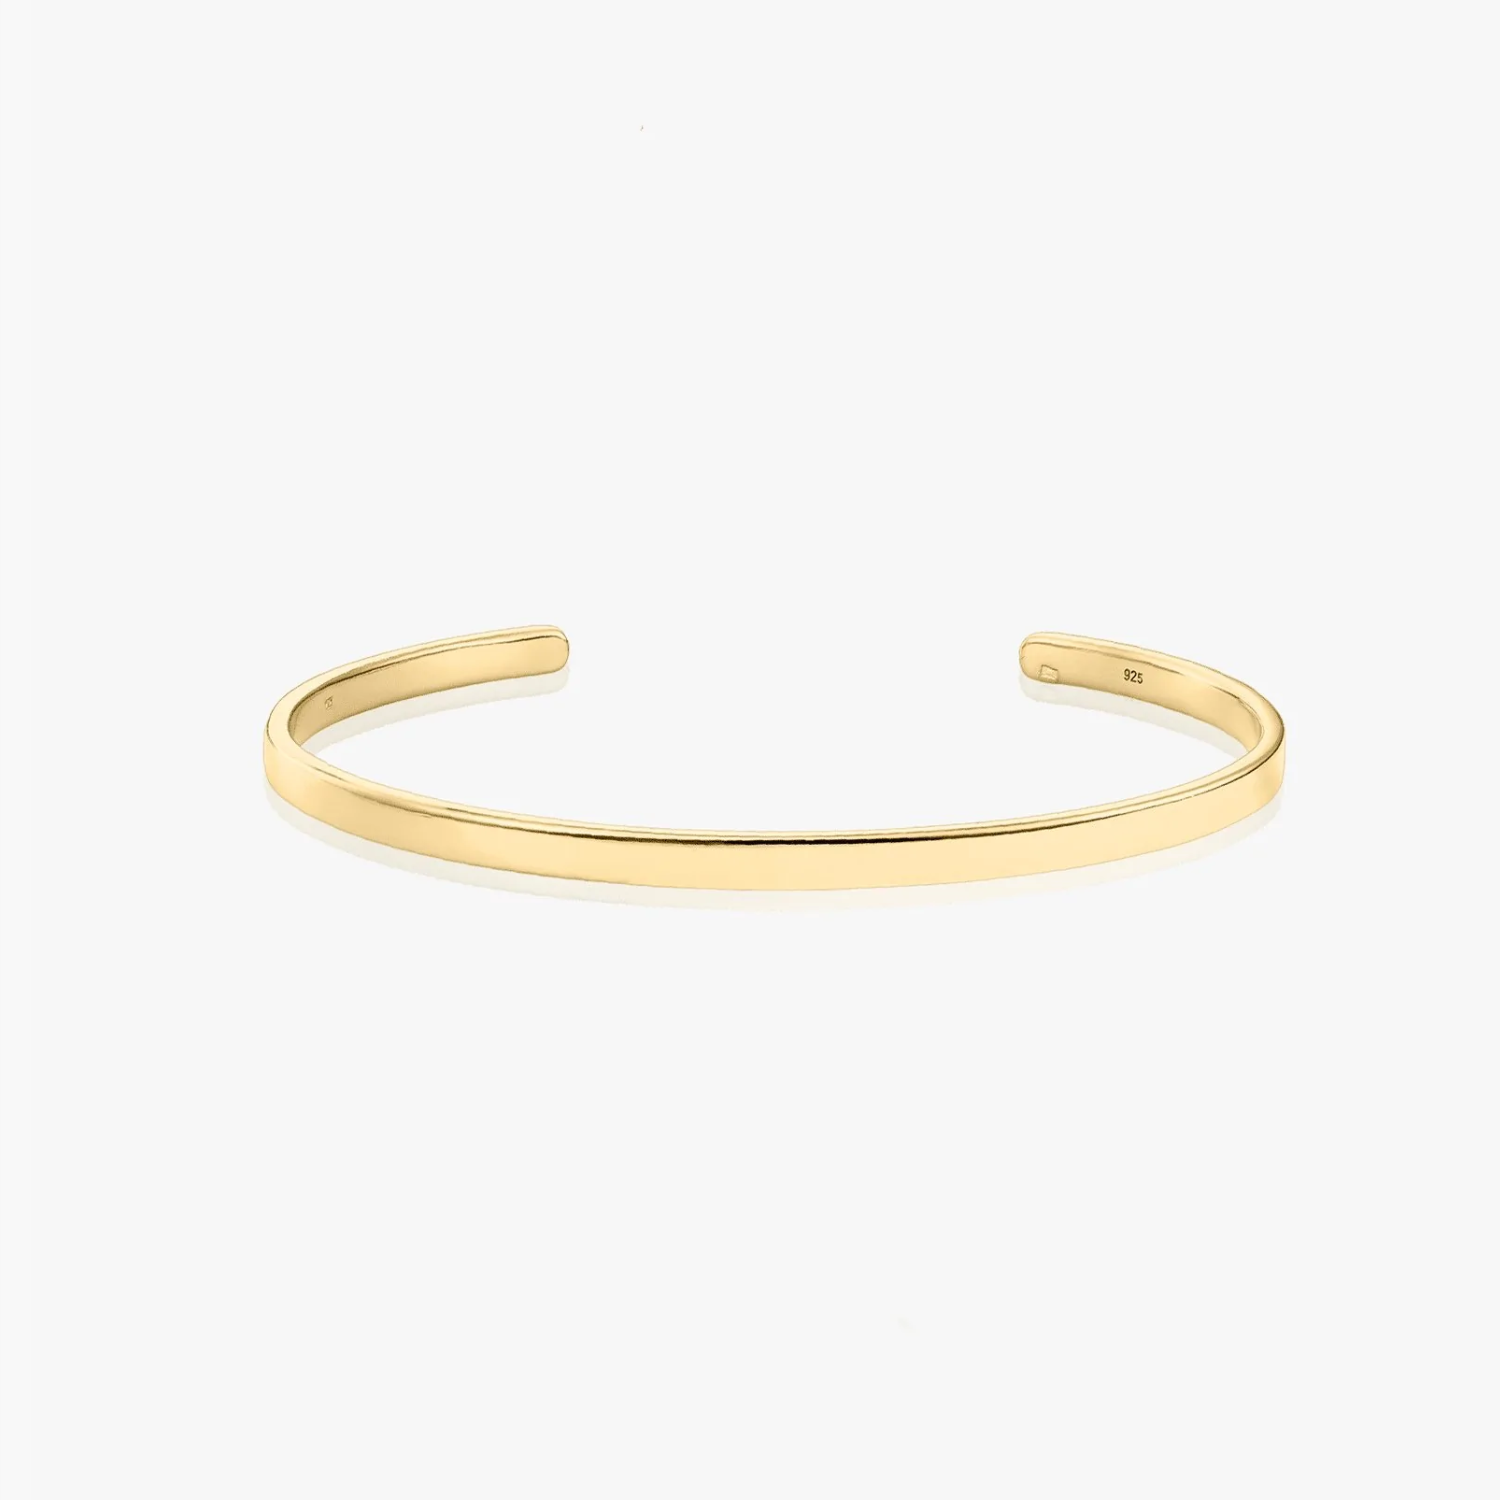 Minimal Golden silver bracelet